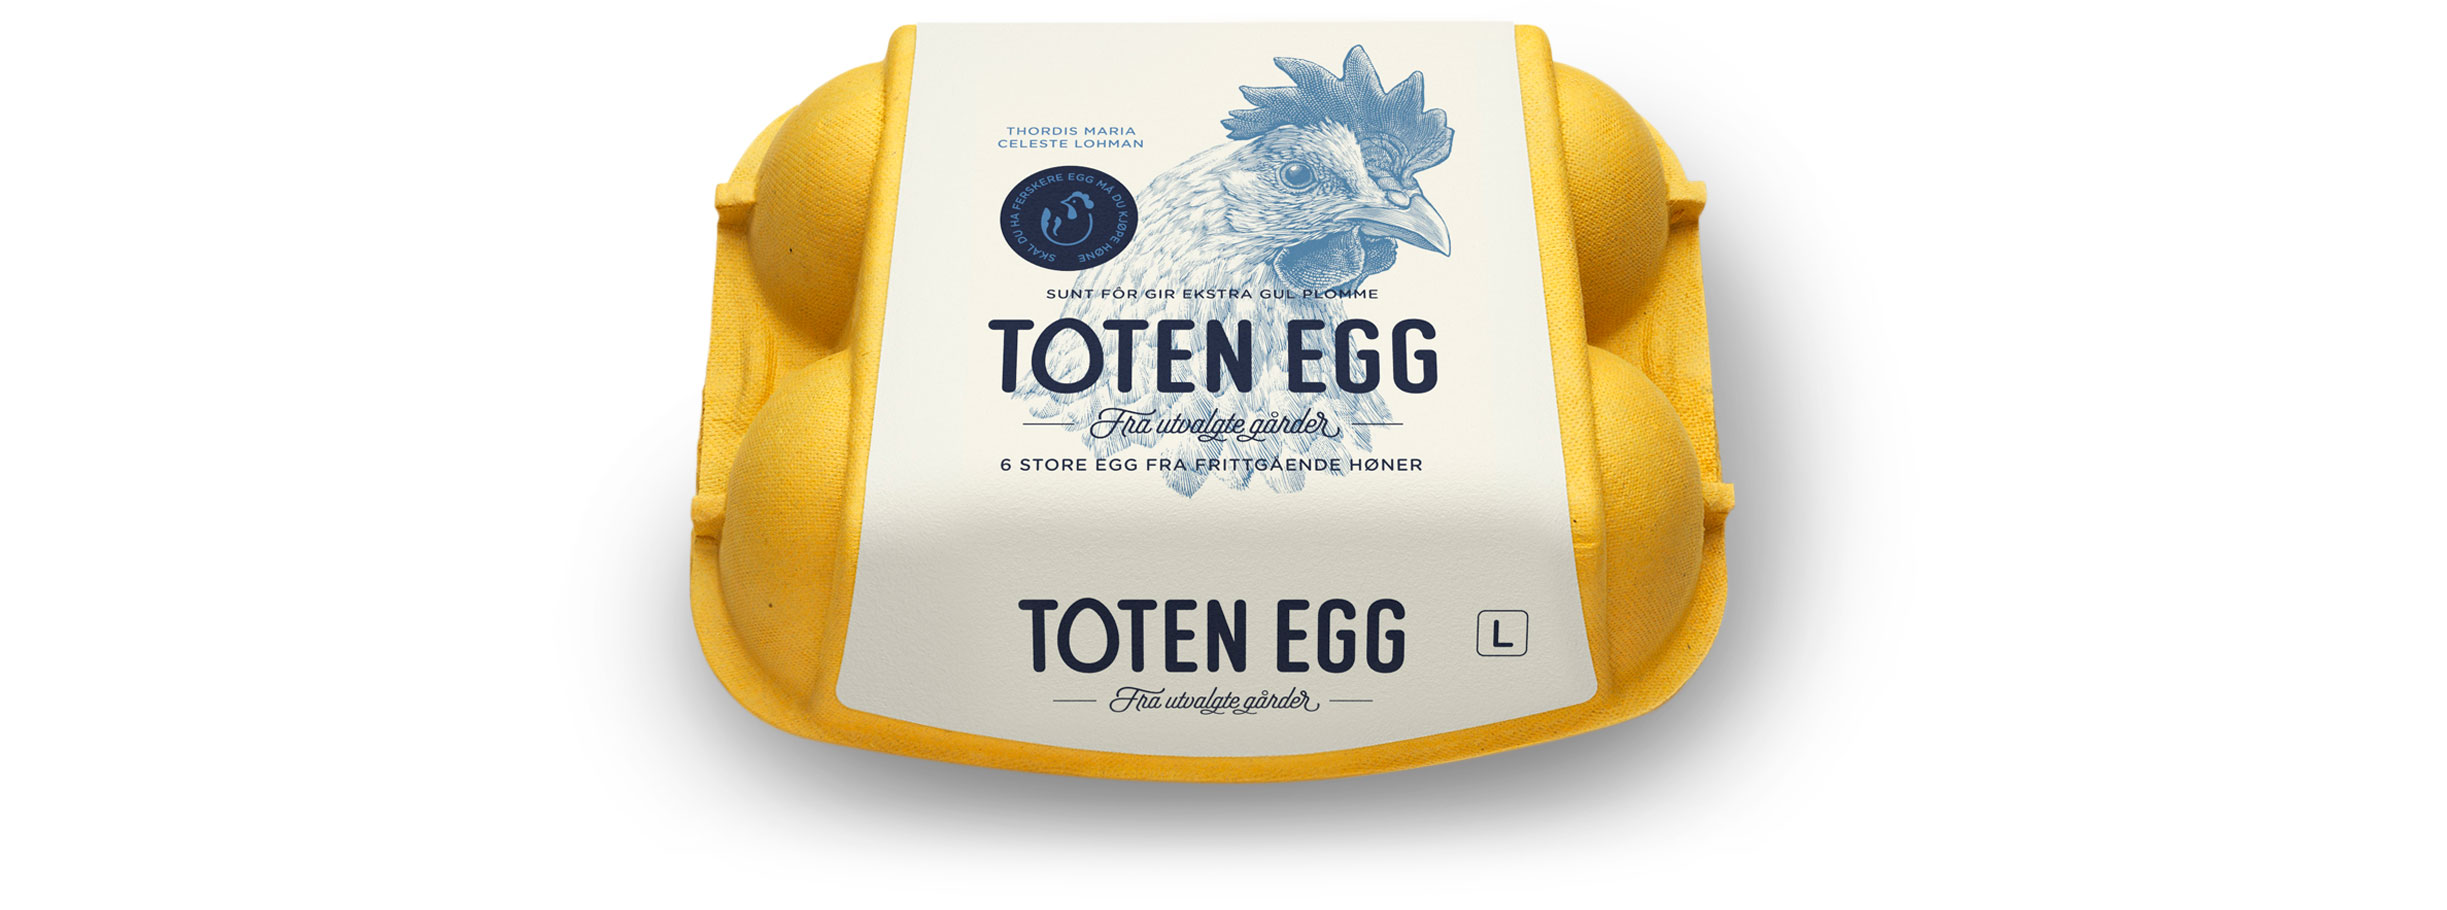 Toten egg kartong box. Emballasje packaging design.